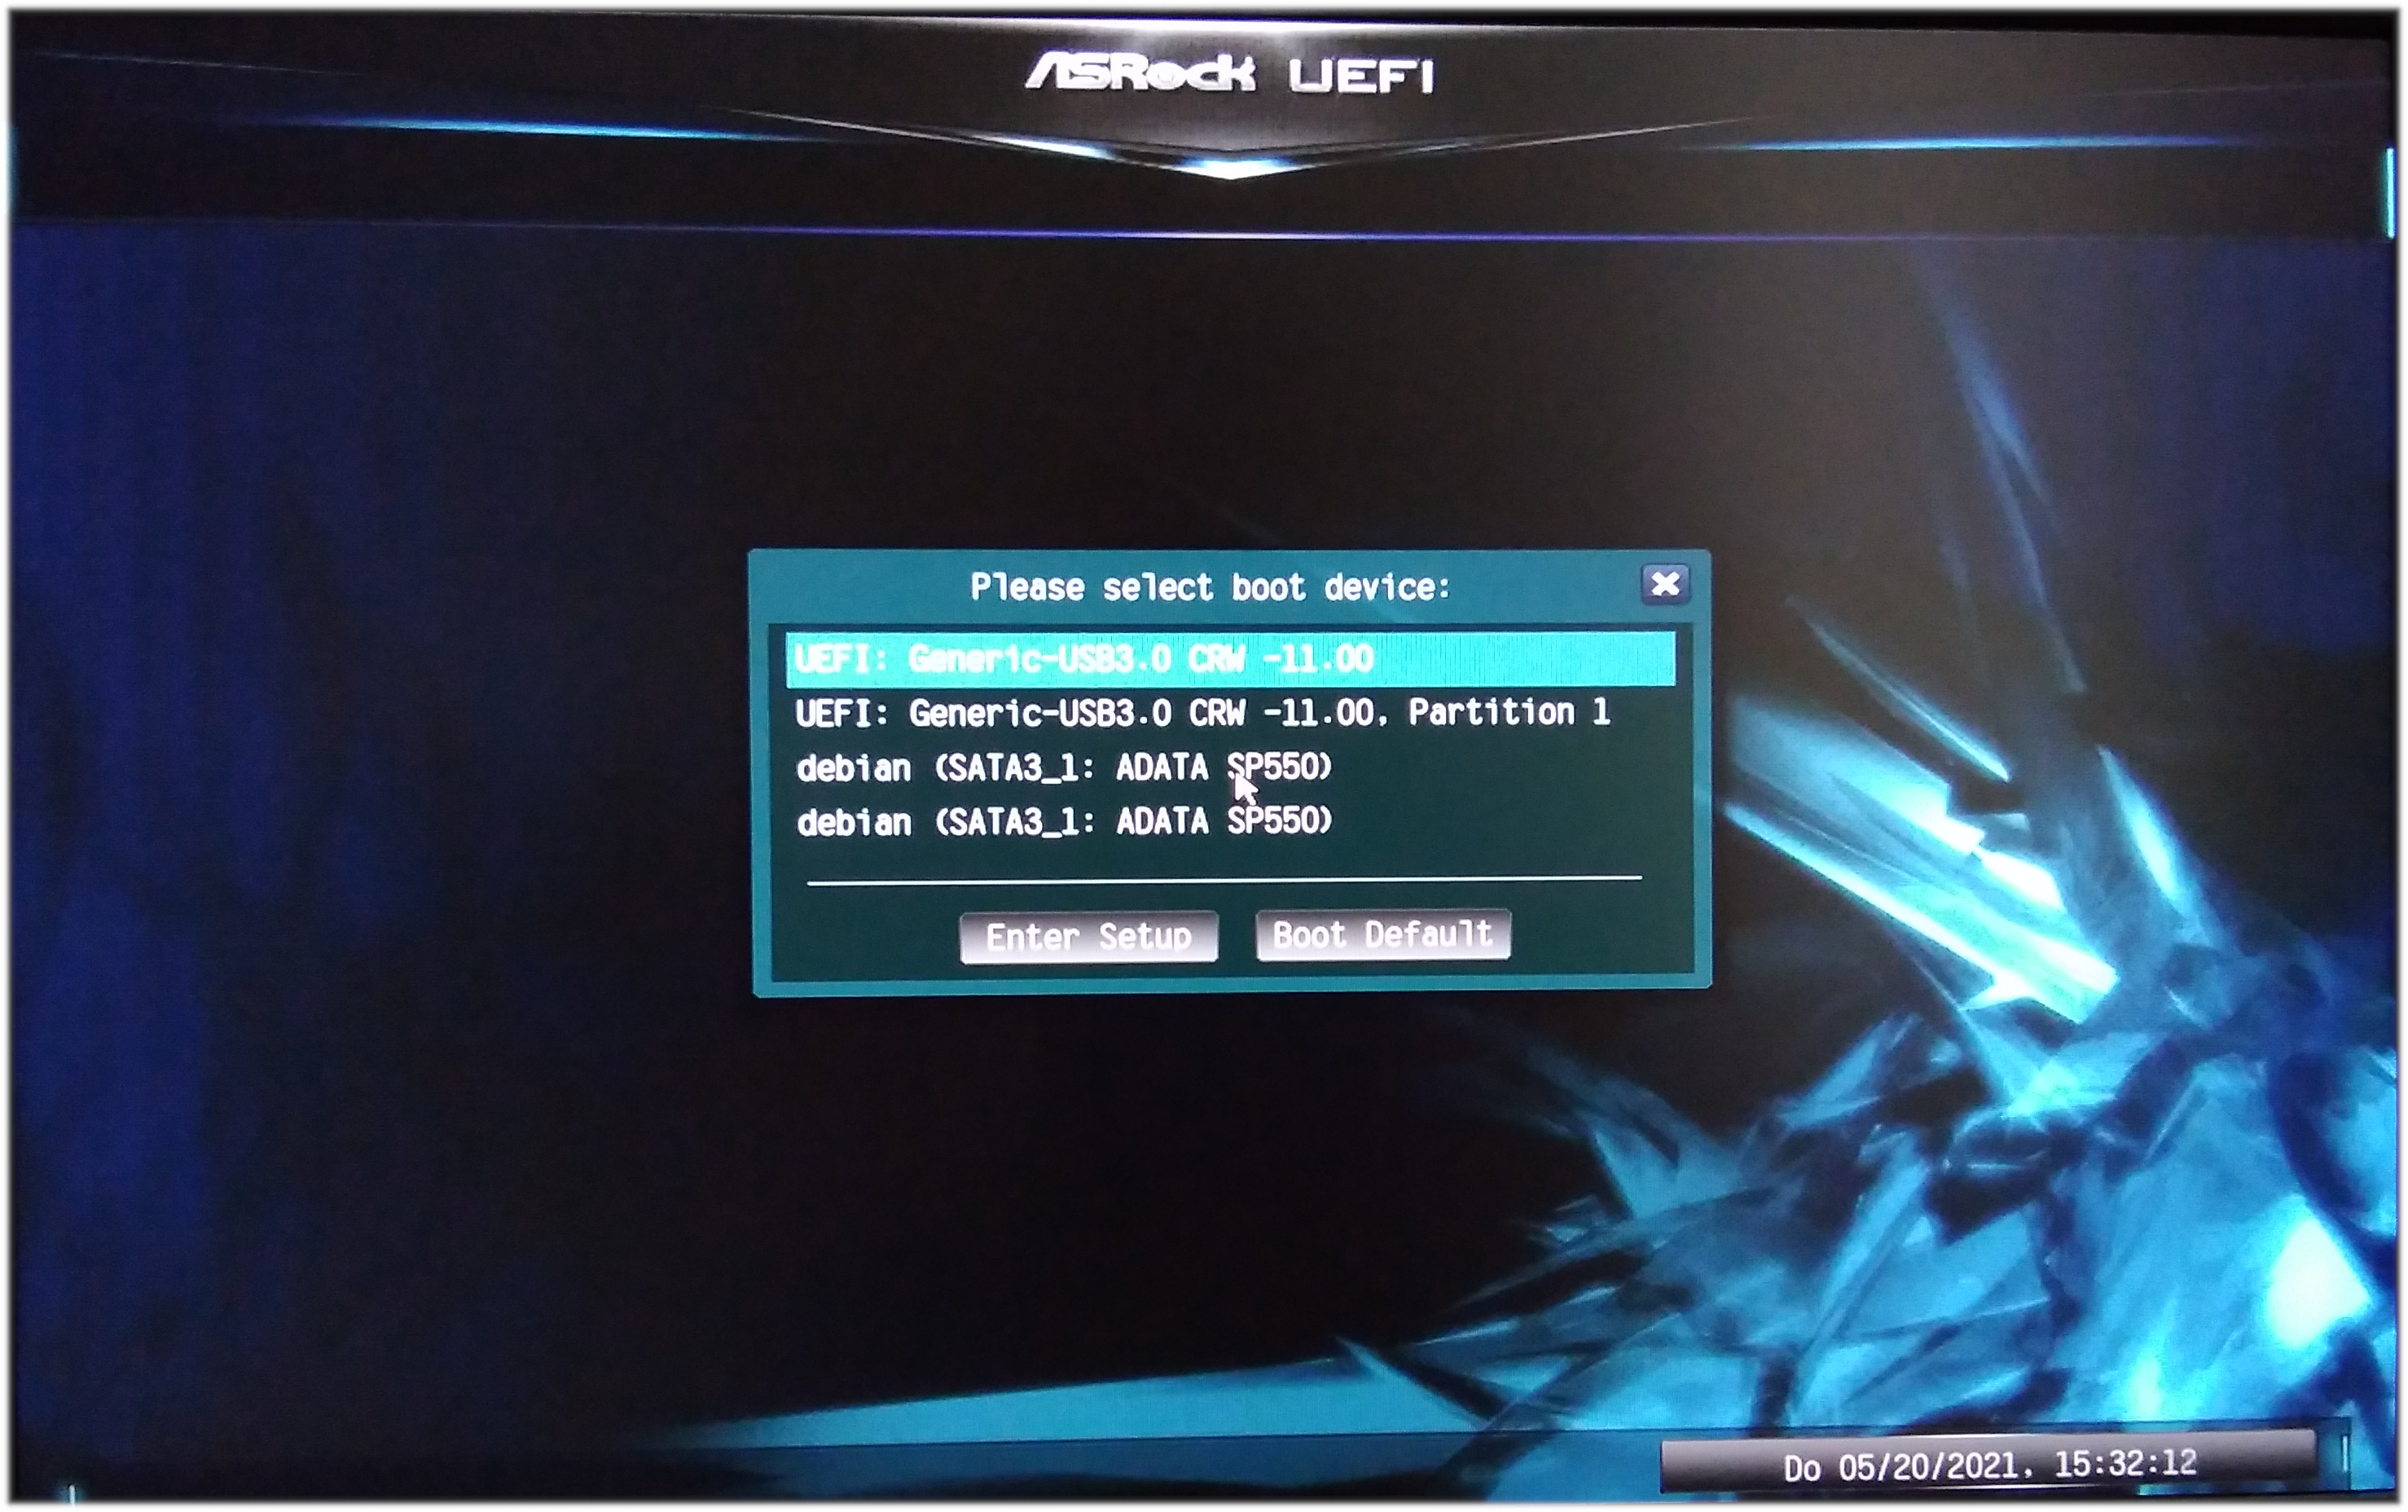 ASRock UEFI - select boot device